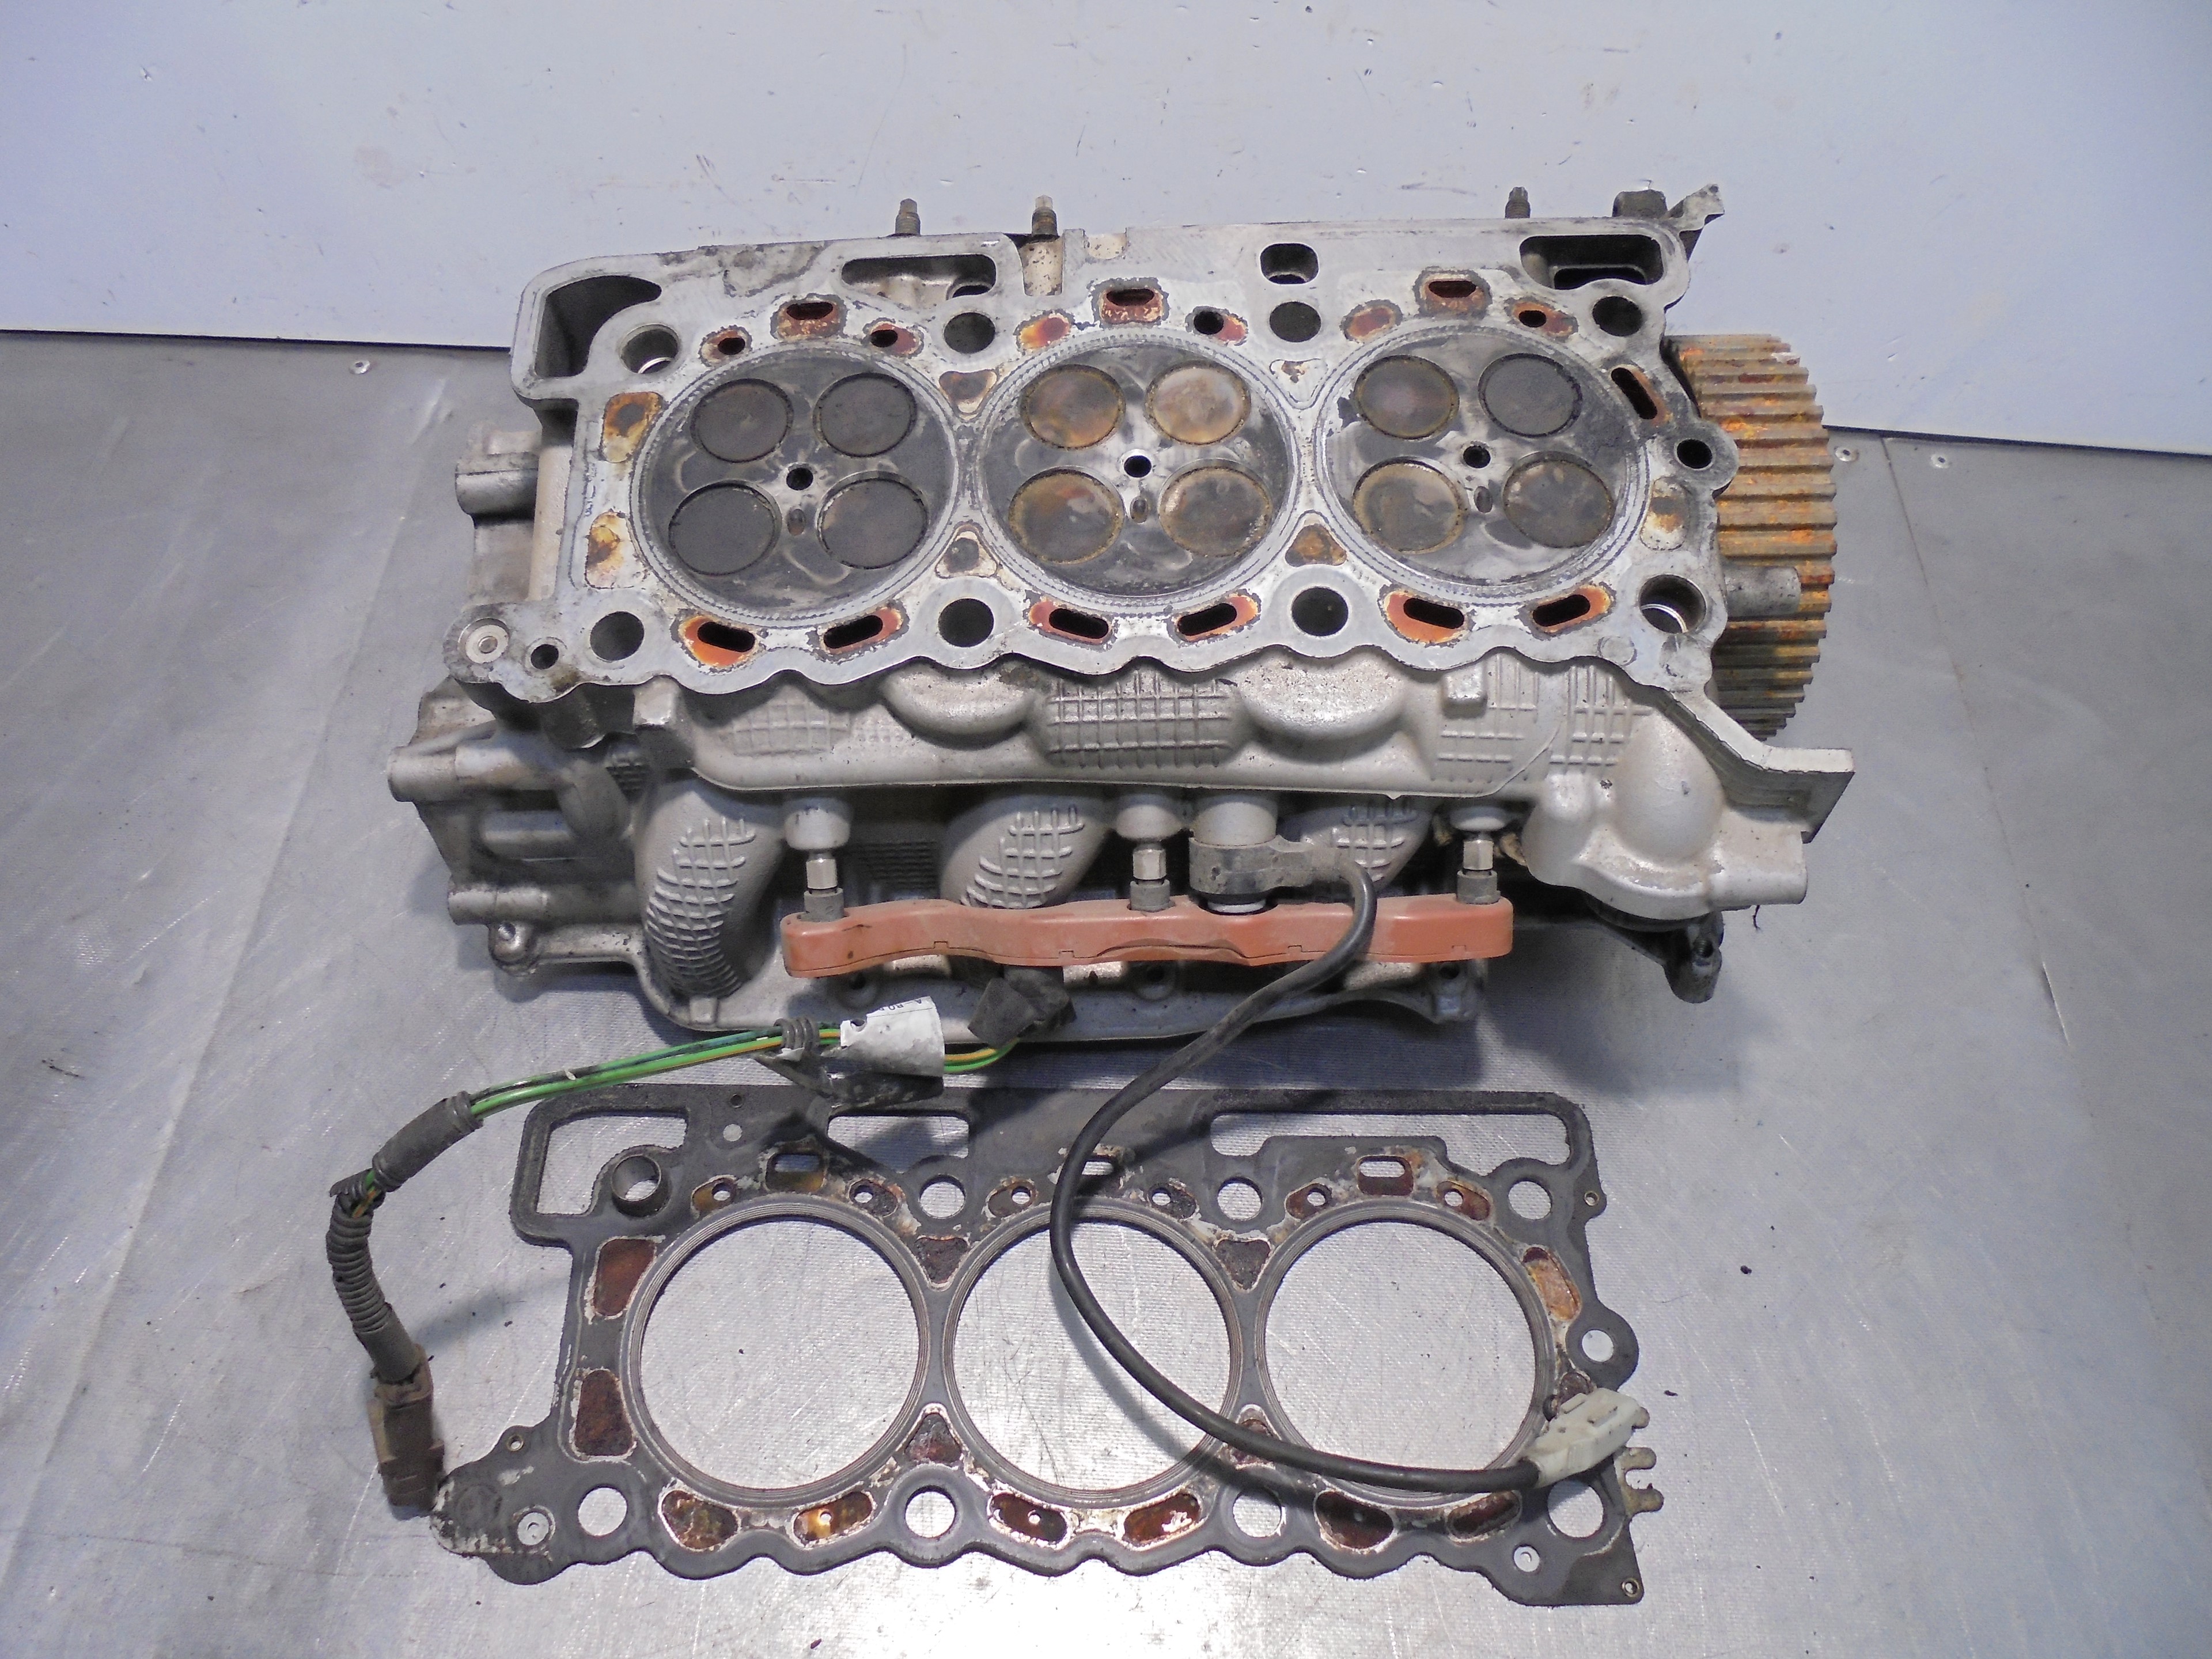 LAND ROVER Range Rover Sport 1 generation (2005-2013) Engine Cylinder Head PM4R8Q6090 25041925